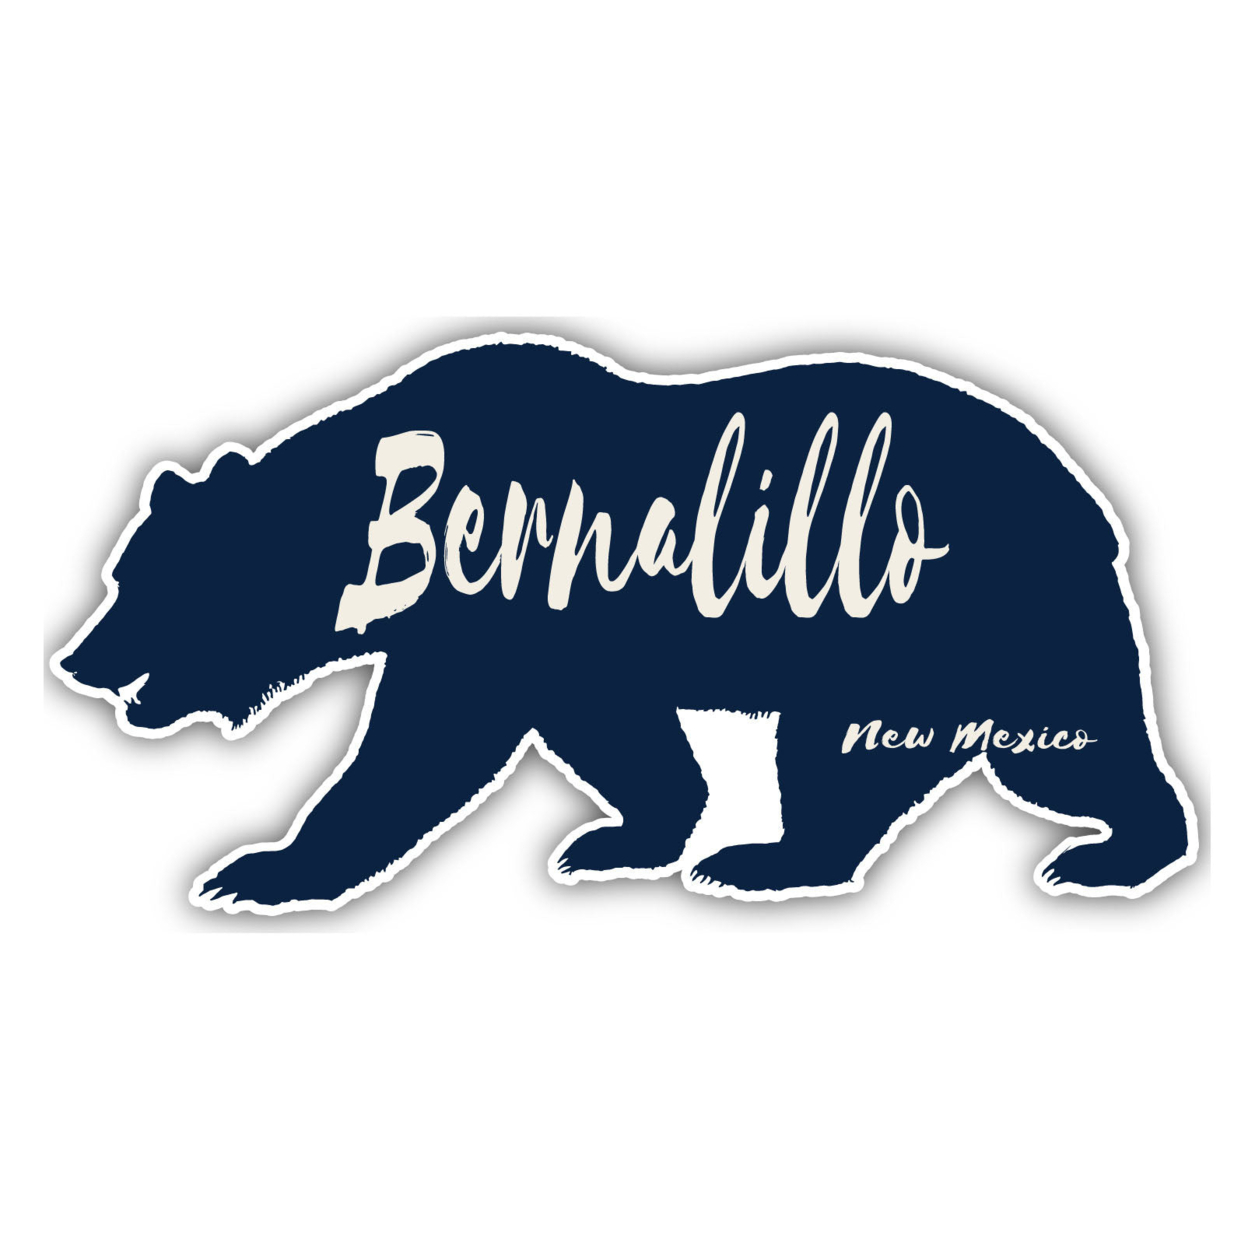 Bernalillo New Mexico Souvenir Decorative Stickers (Choose Theme And Size) - Single Unit, 4-Inch, Camp Life